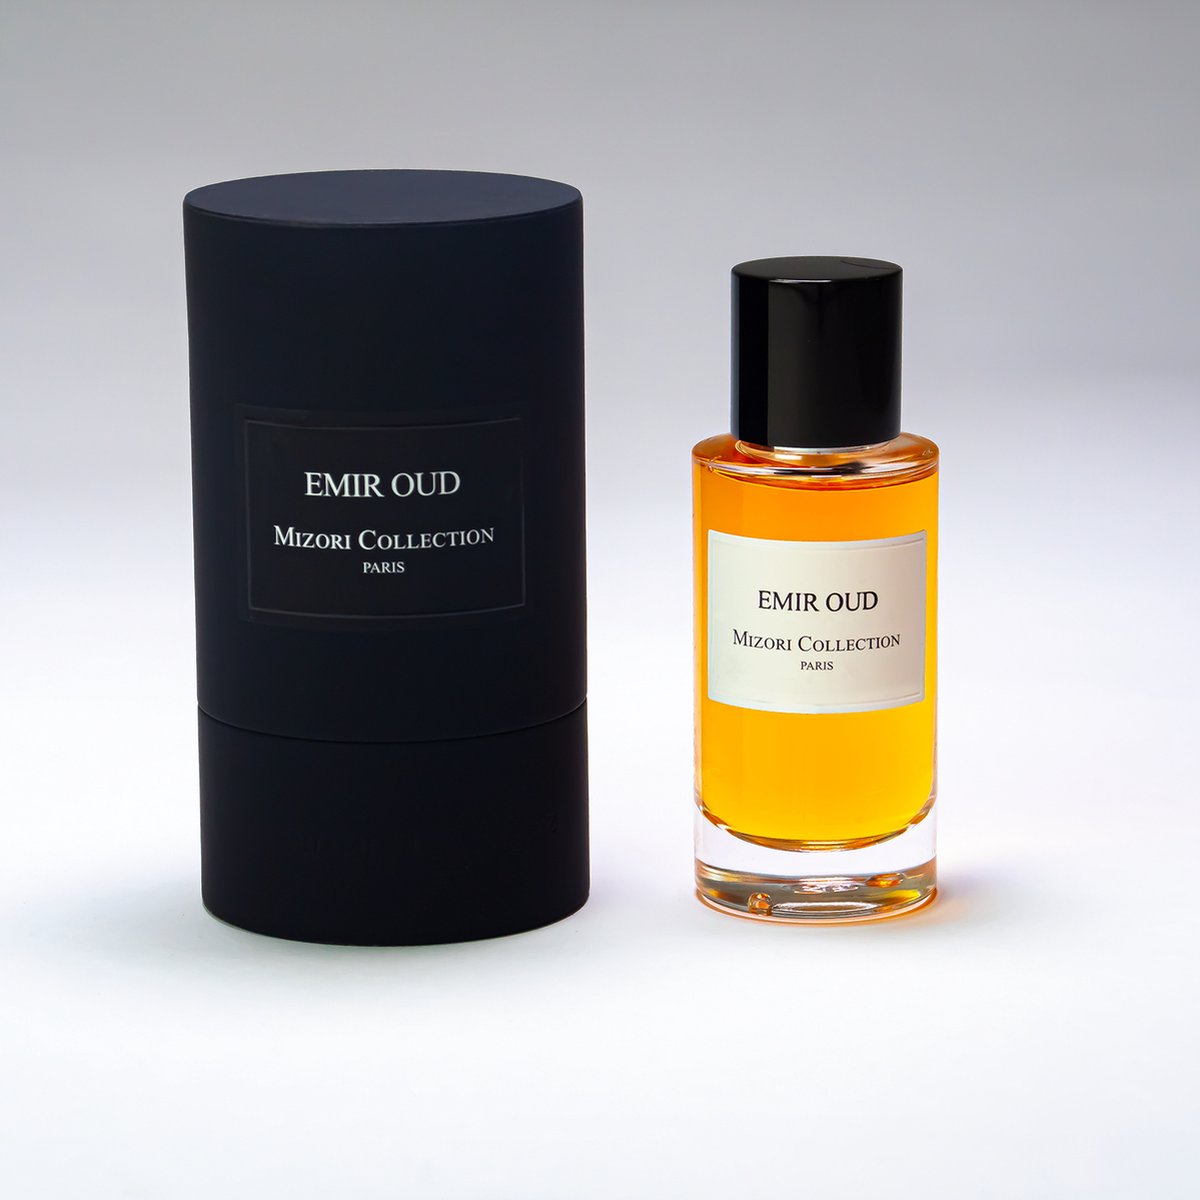 Emir Oud - Mizori Collection Paris - High Exclusive Perfume - Eau de Parfum - 50 ml - Niche Perfume